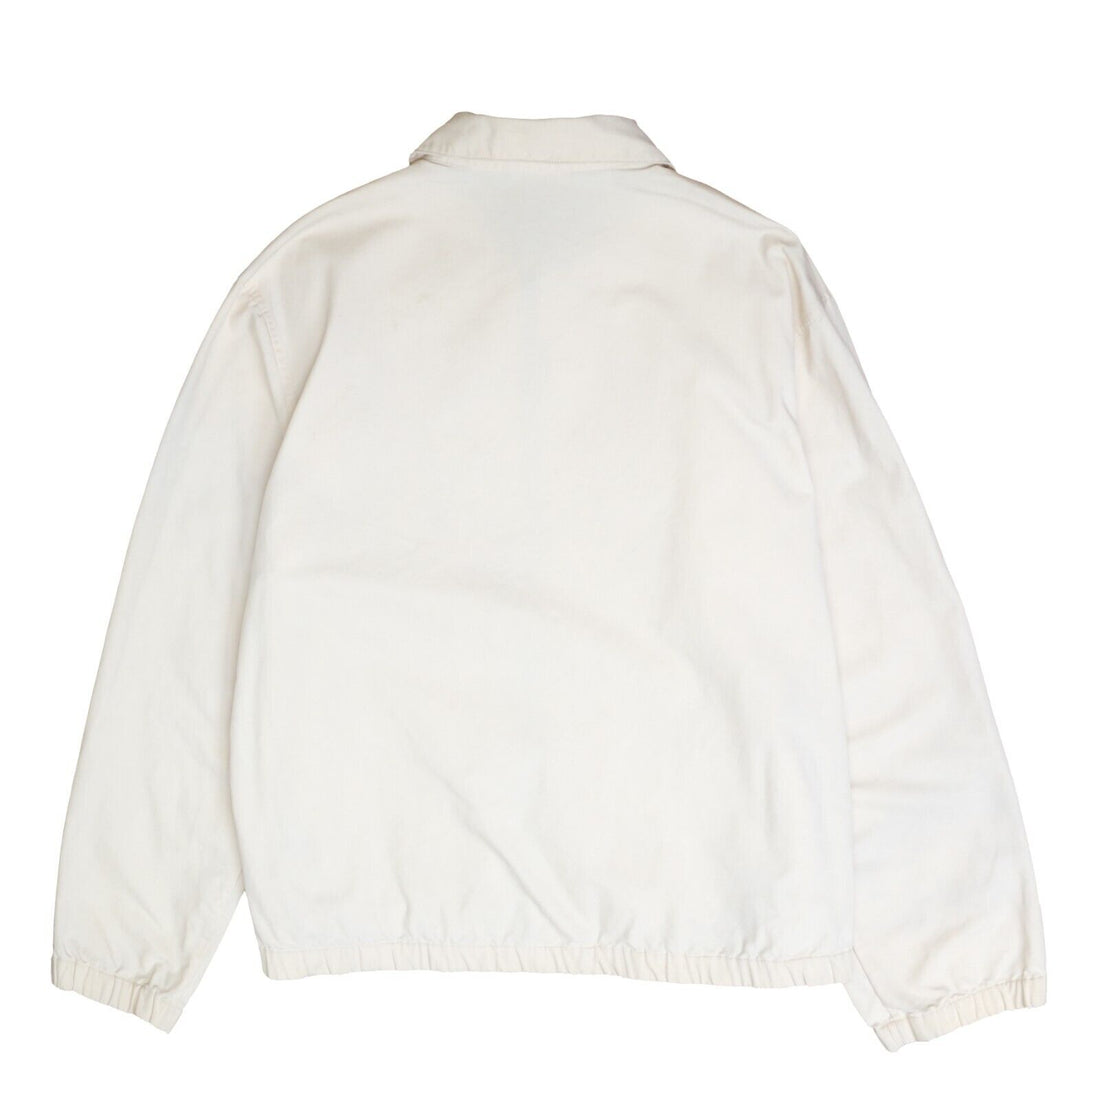 Vintage Polo Ralph Lauren Harrington Jacket Size Medium Tan Beige